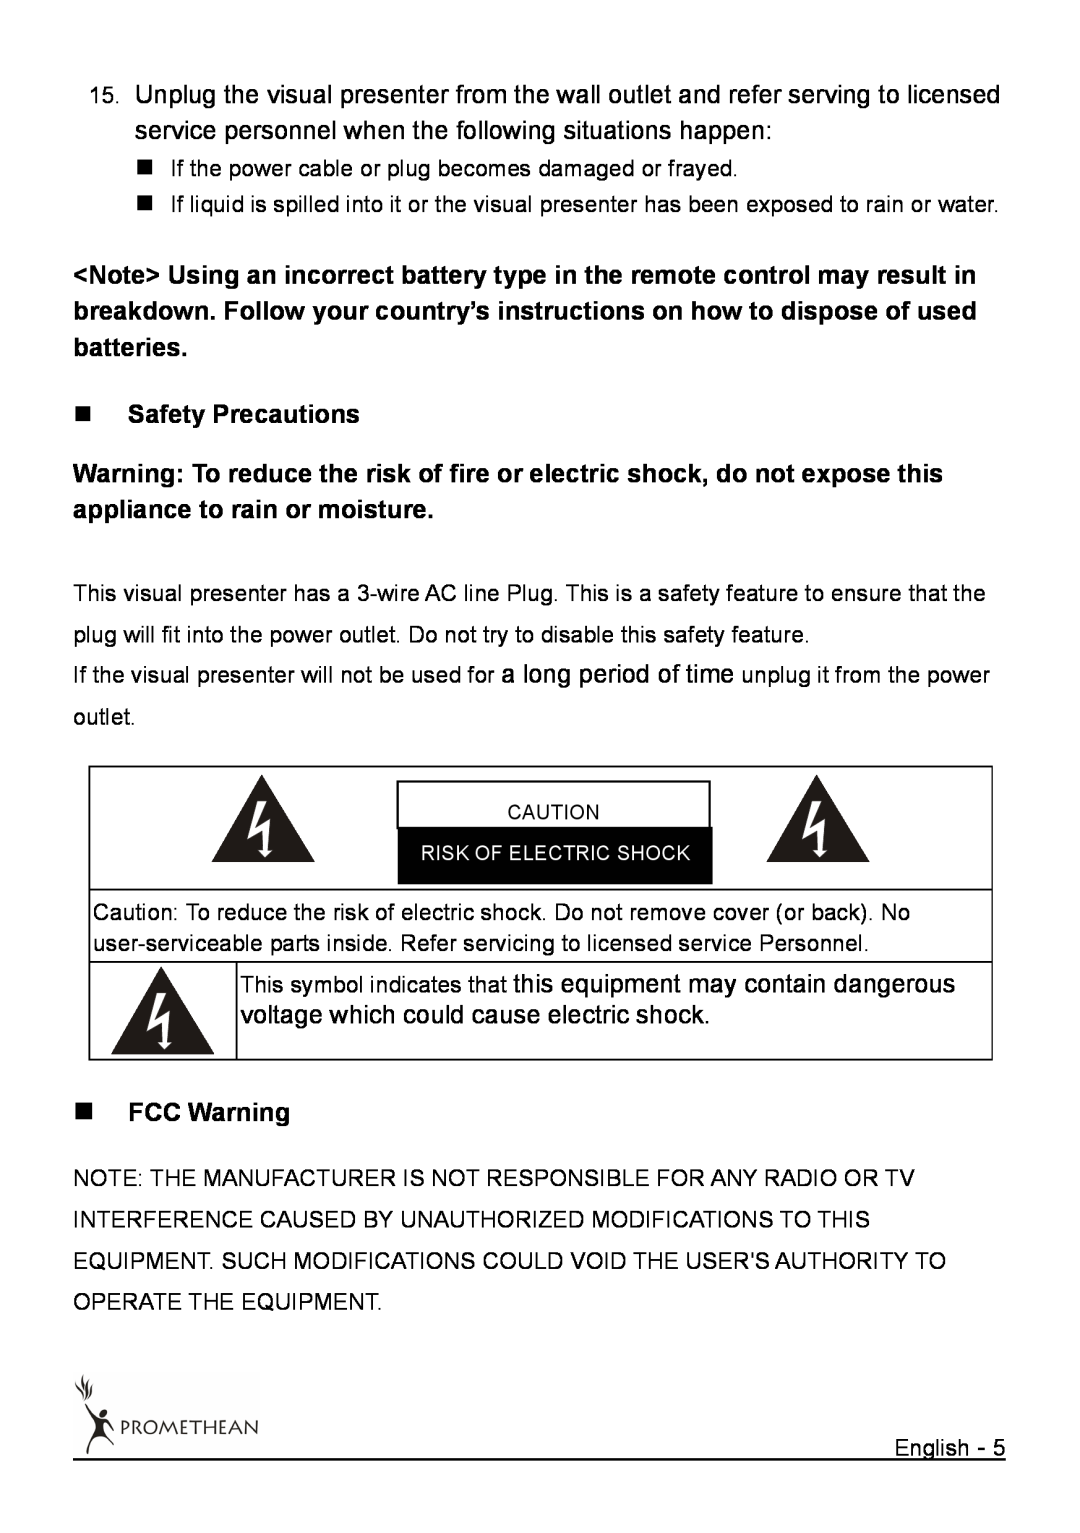 Promethean 322 user manual „Safety Precautions, „FCC Warning 